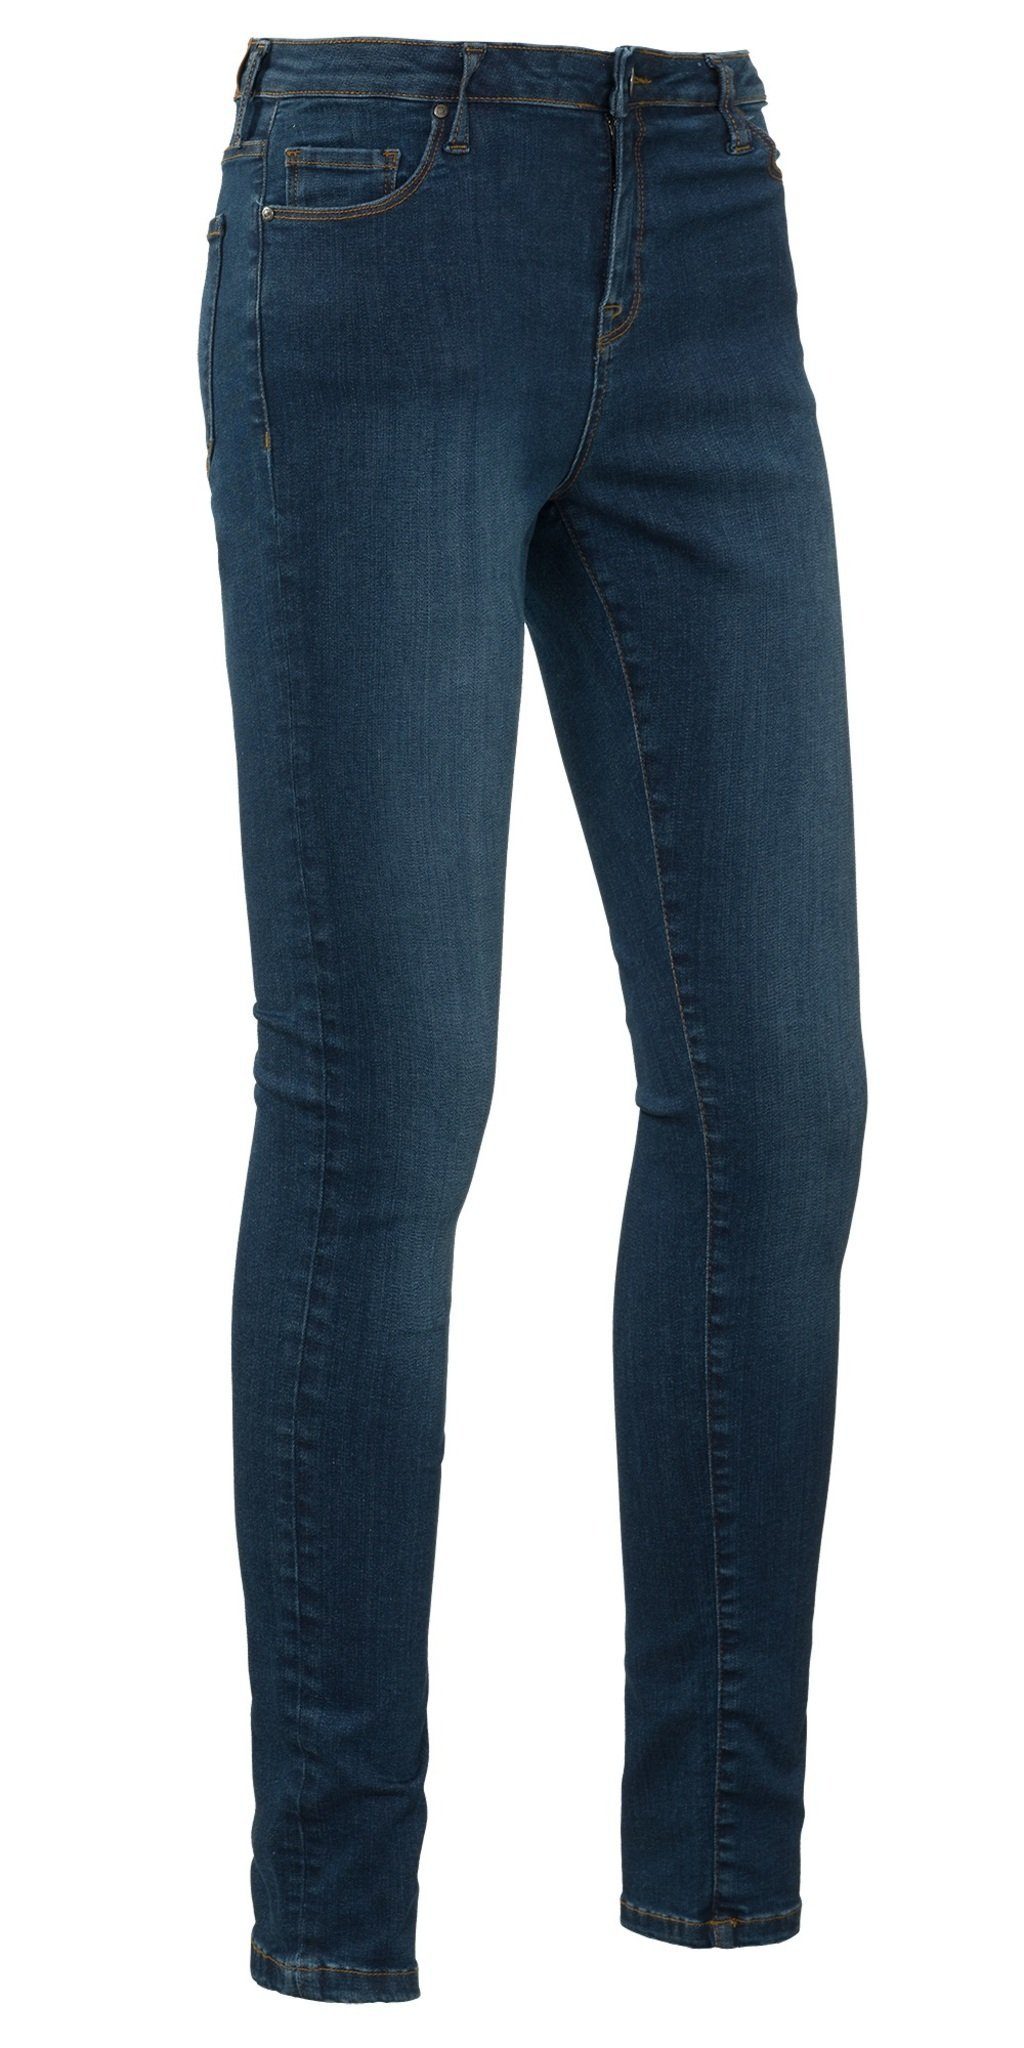 Maison de Paris 5-Pocket-Hose Damen Jeans Hose Kate - Figurbetonende Jeanshose im Five-Pocket-Stil blau c71